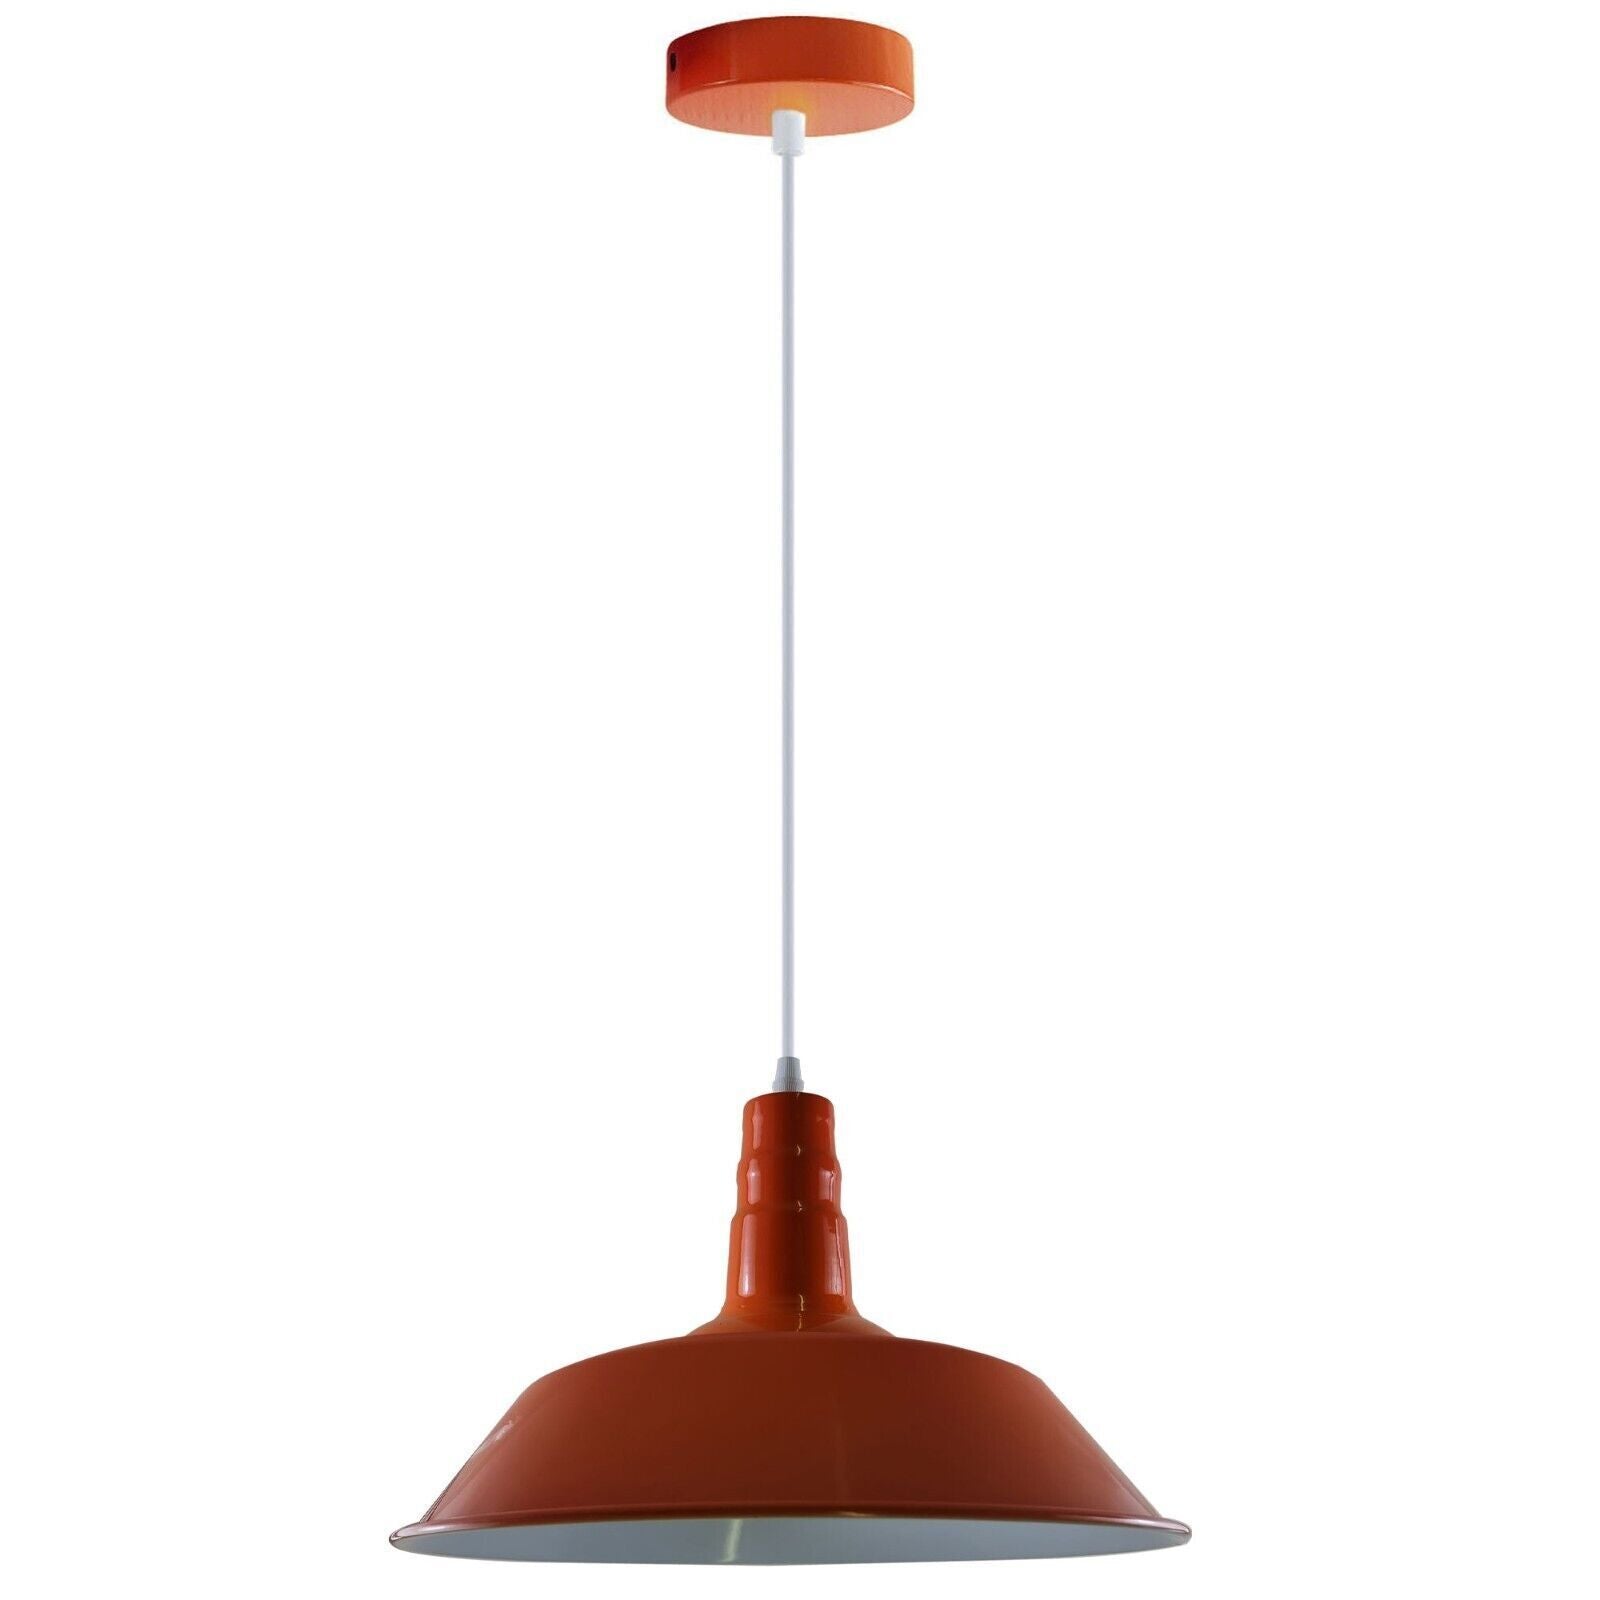 Modern adjustable Hanging bowl Orange pendant Lamp E27 holder